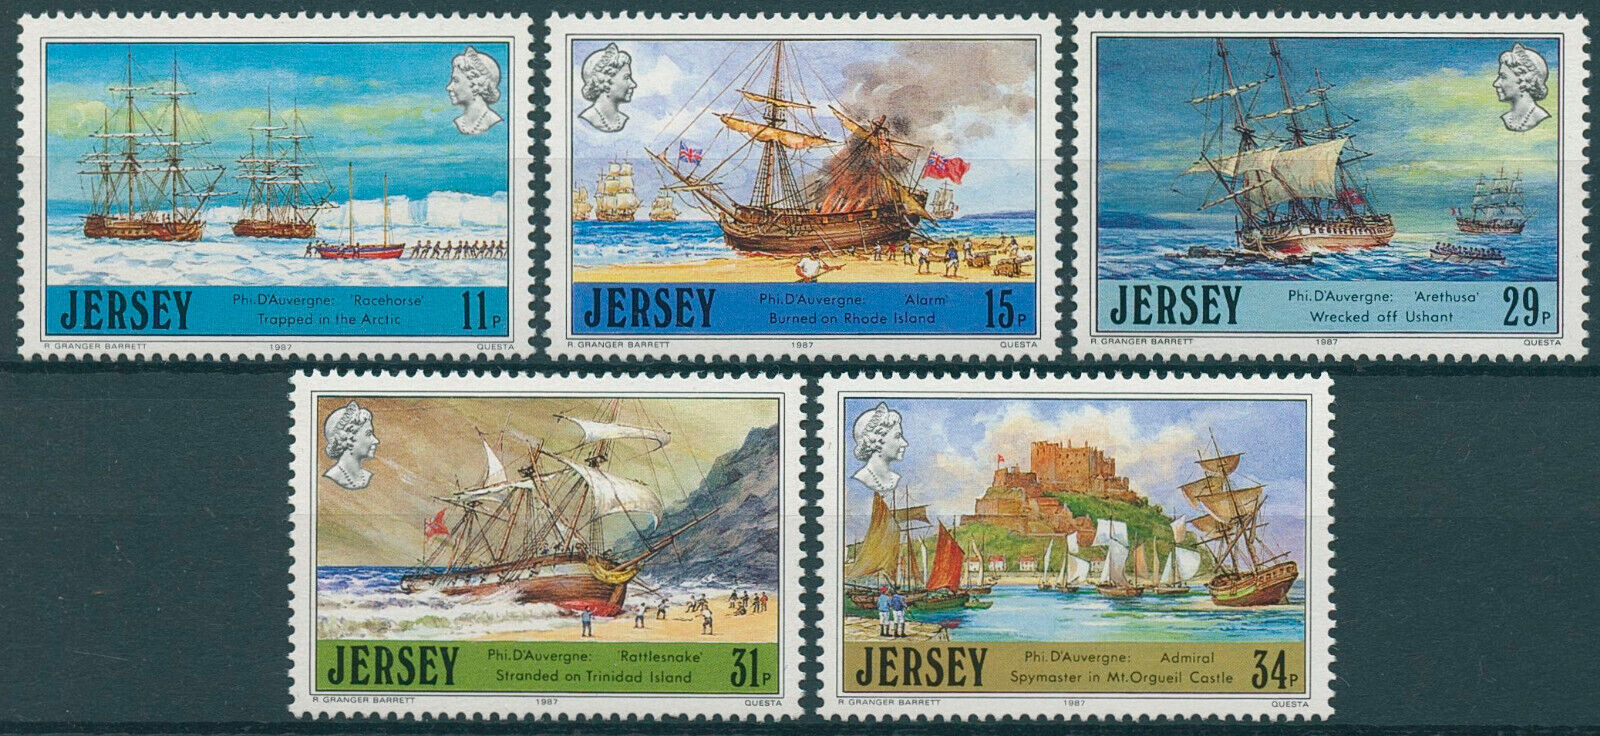 Jersey 1987 MNH Ships Stamps Jersey Adventurers Philippe d'Auvergne 5v Set